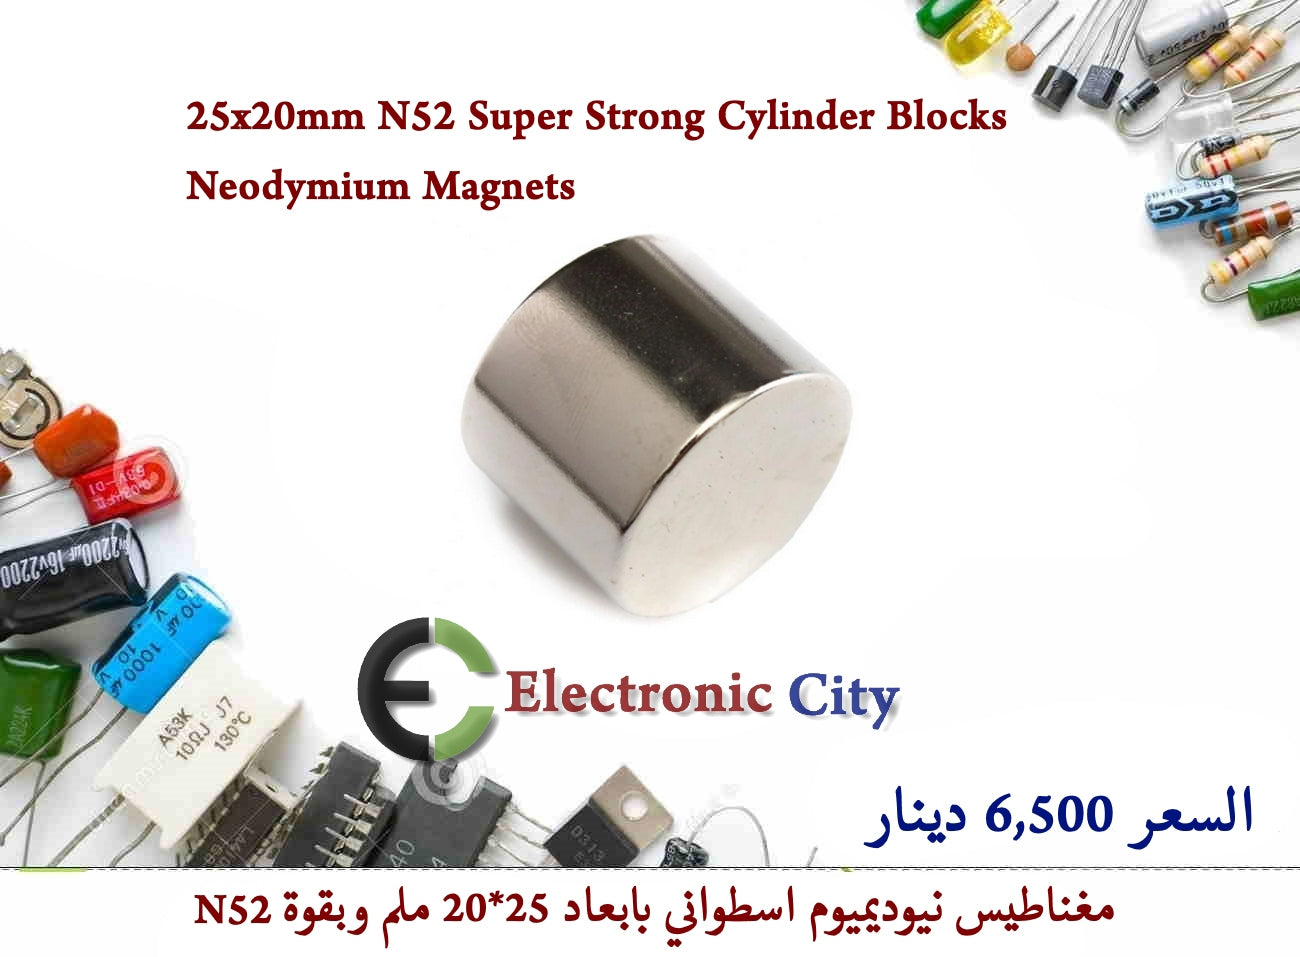 25x20mm N52 Super Strong Cylinder Blocks Neodymium Magnets